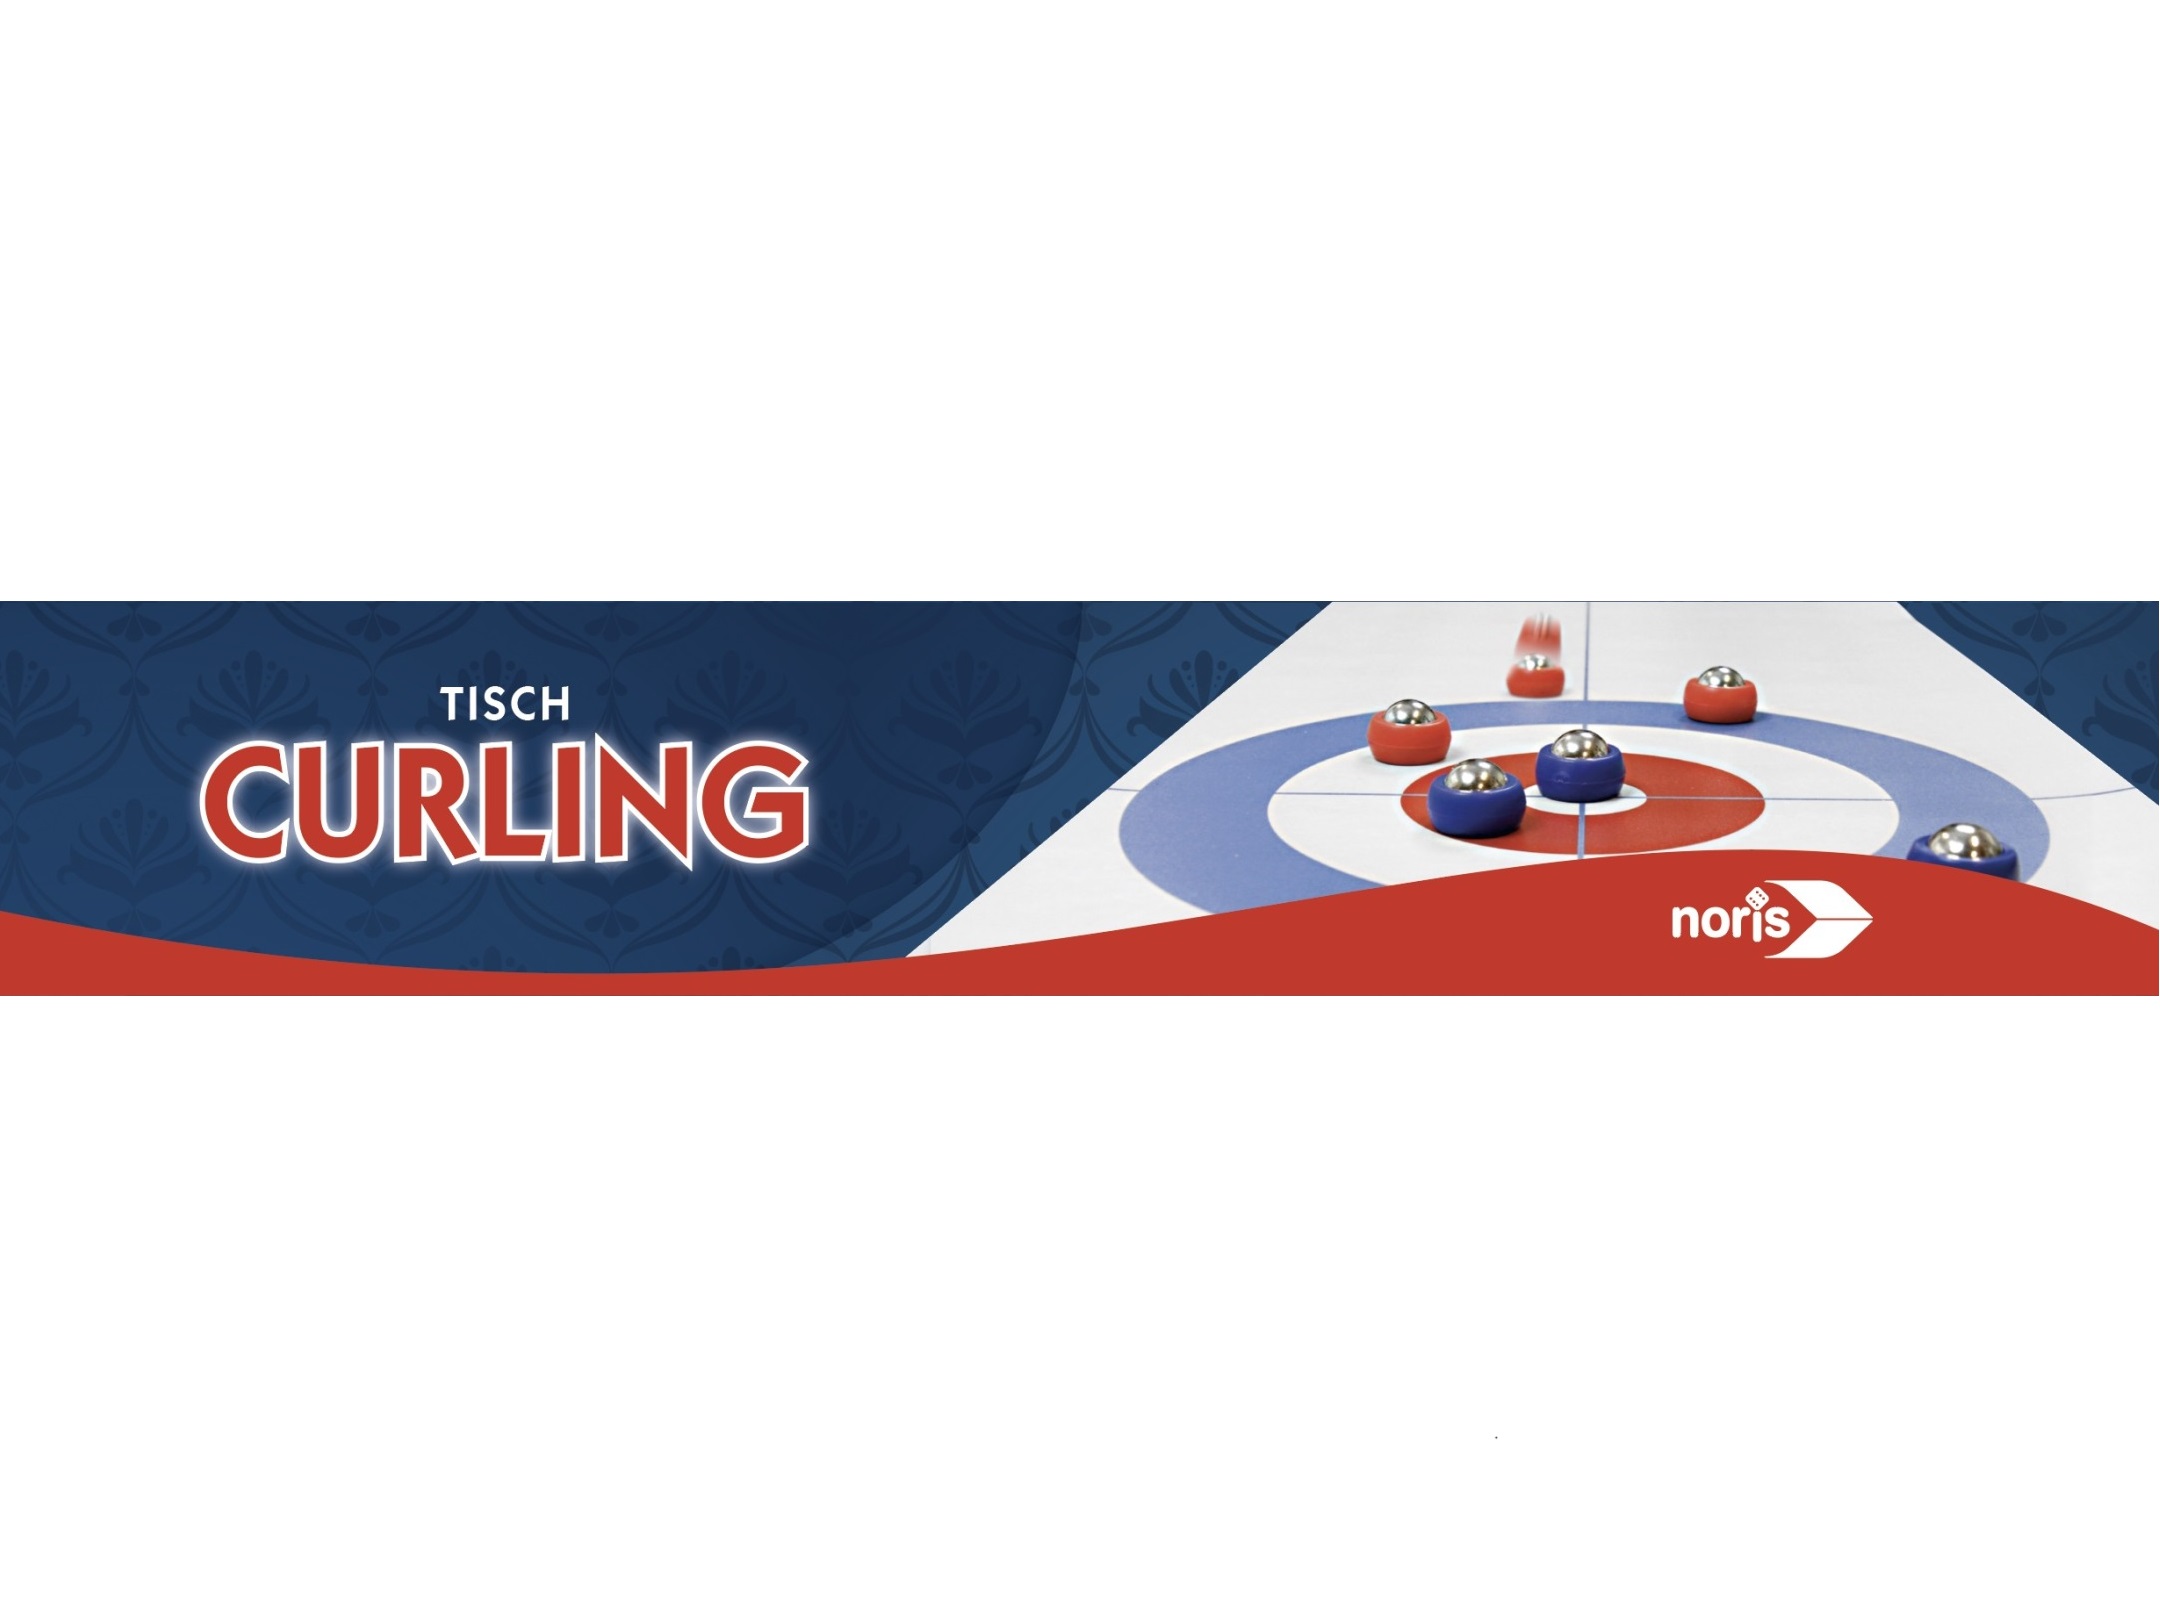 Tisch Curling